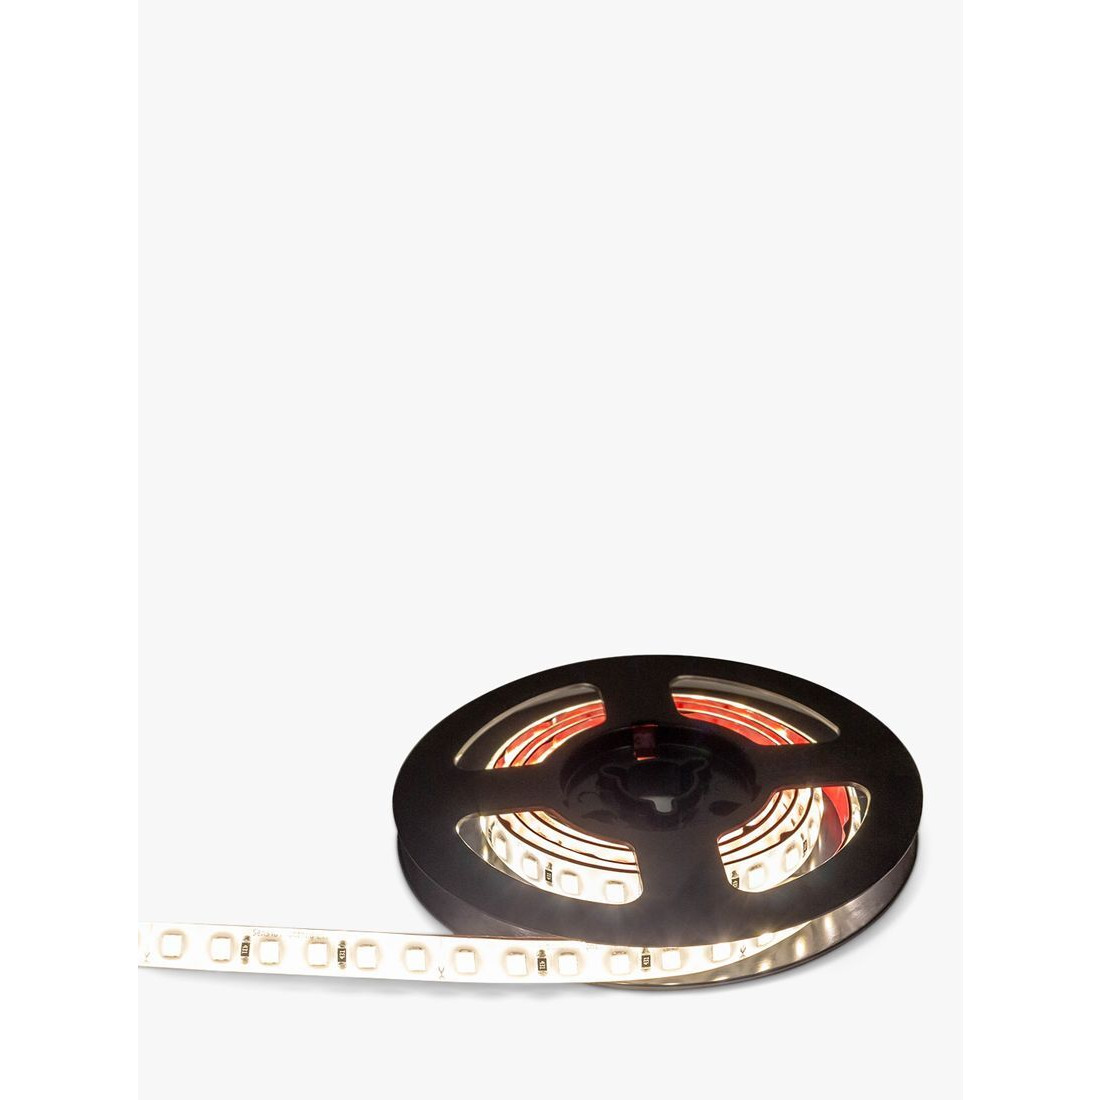 Sensio Solis LED Flexible Kitchen Cabinet Strip Light Reel & Driver, 5m, White - image 1